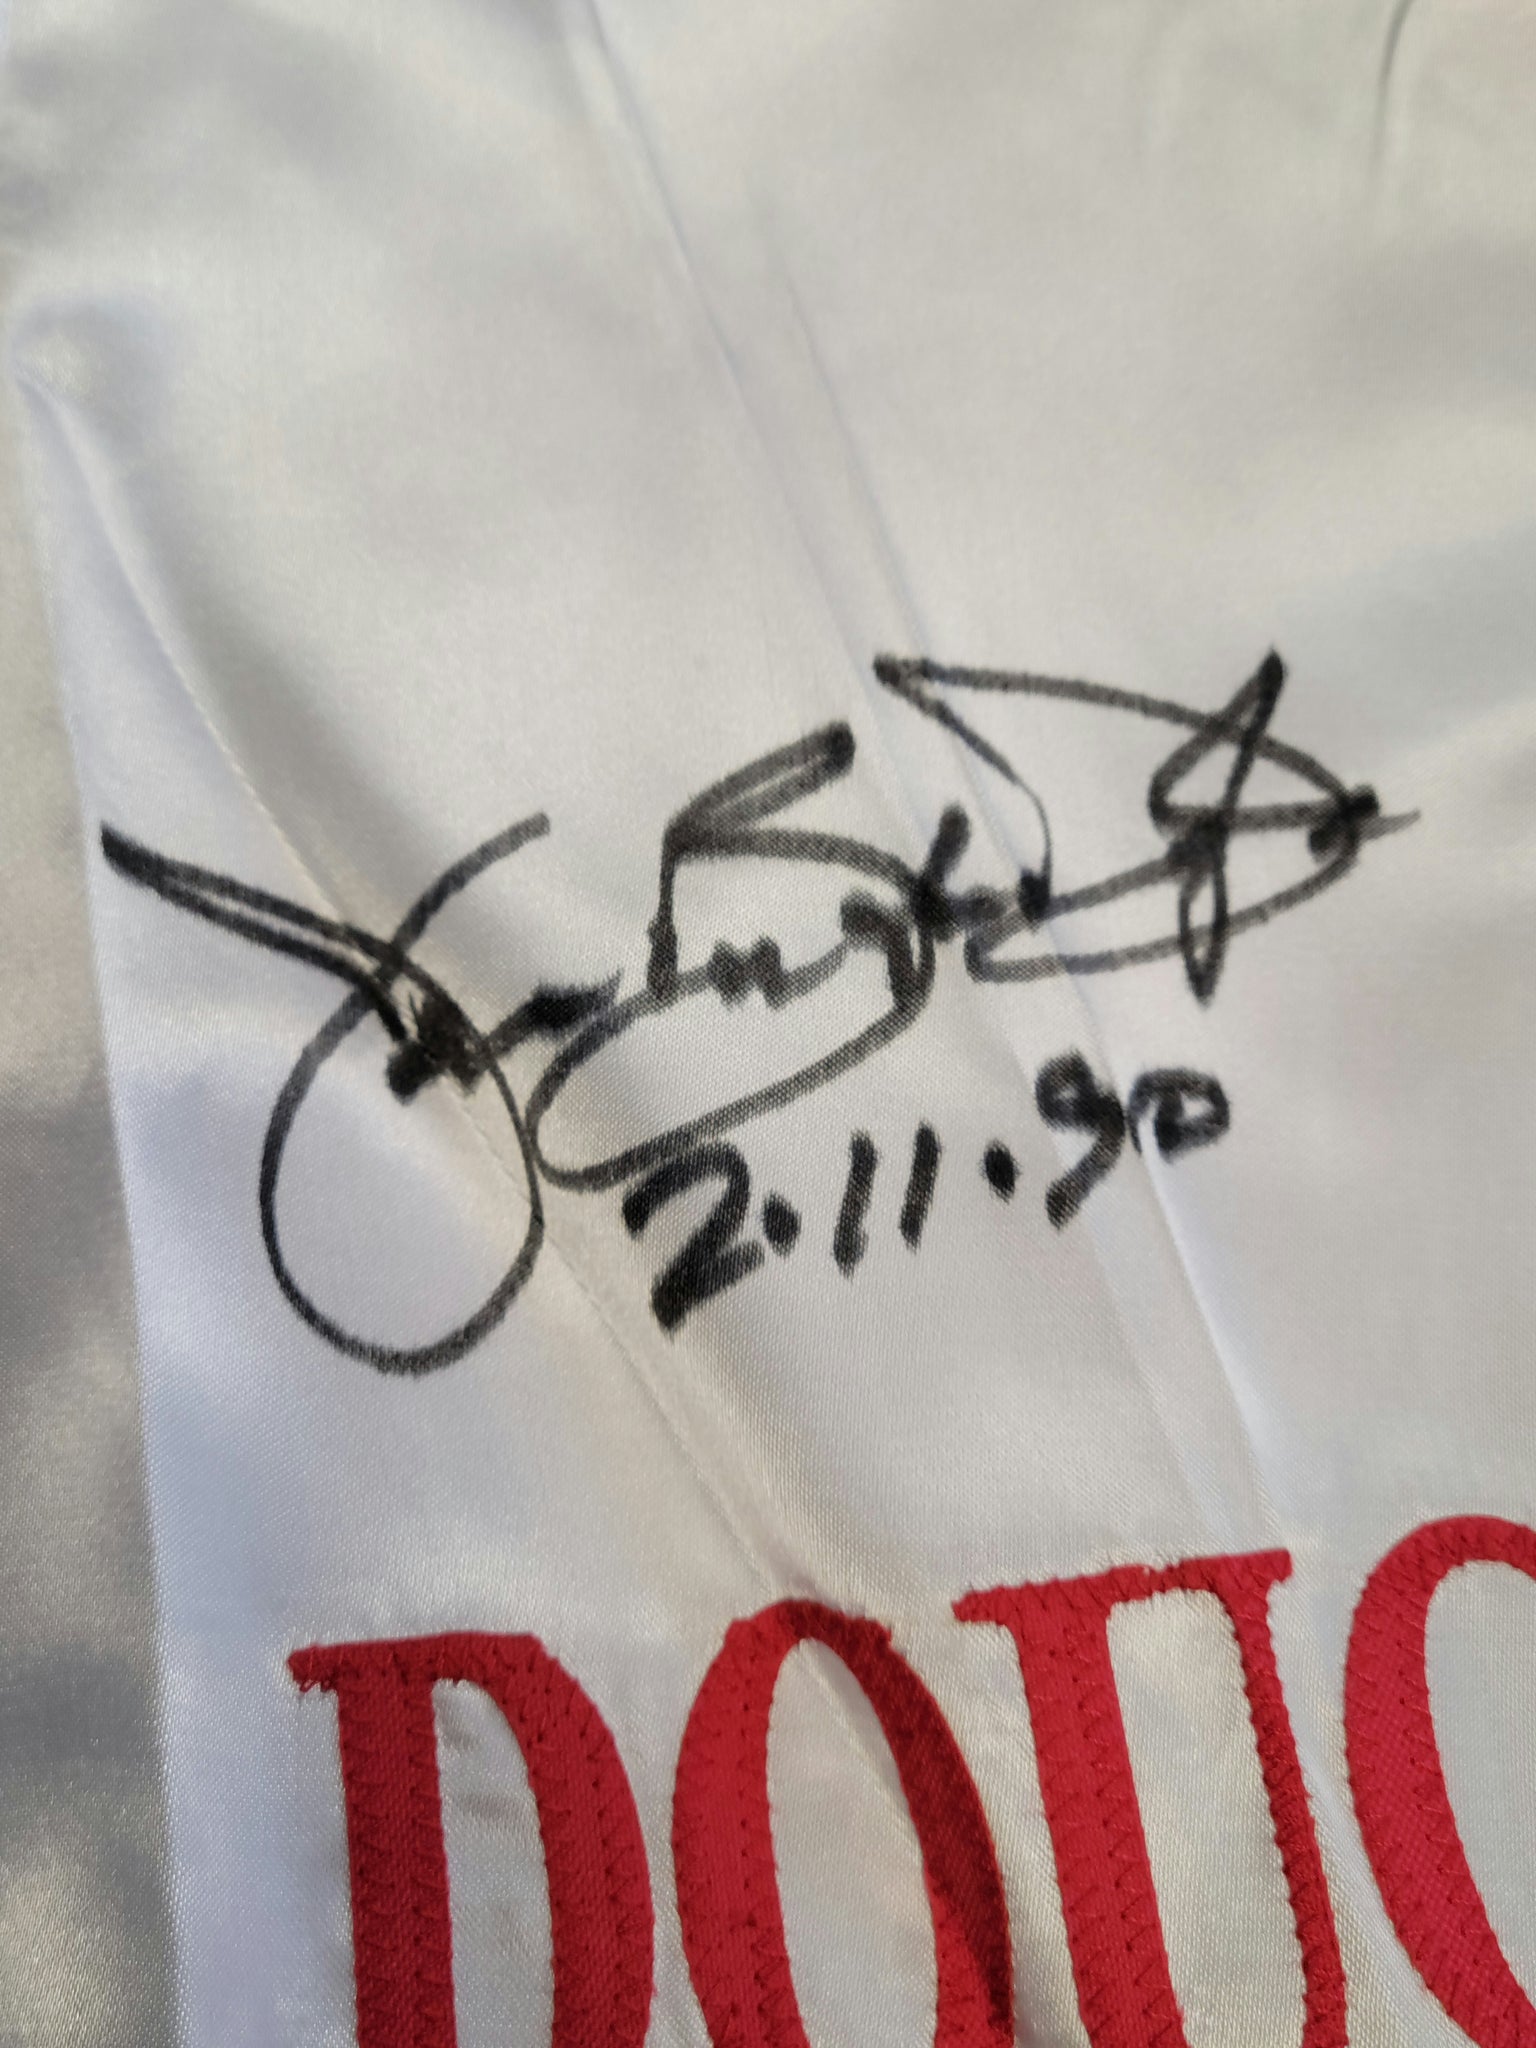 James "Buster" Douglas Authentic Signed Boxing Shorts Autographed JSA-